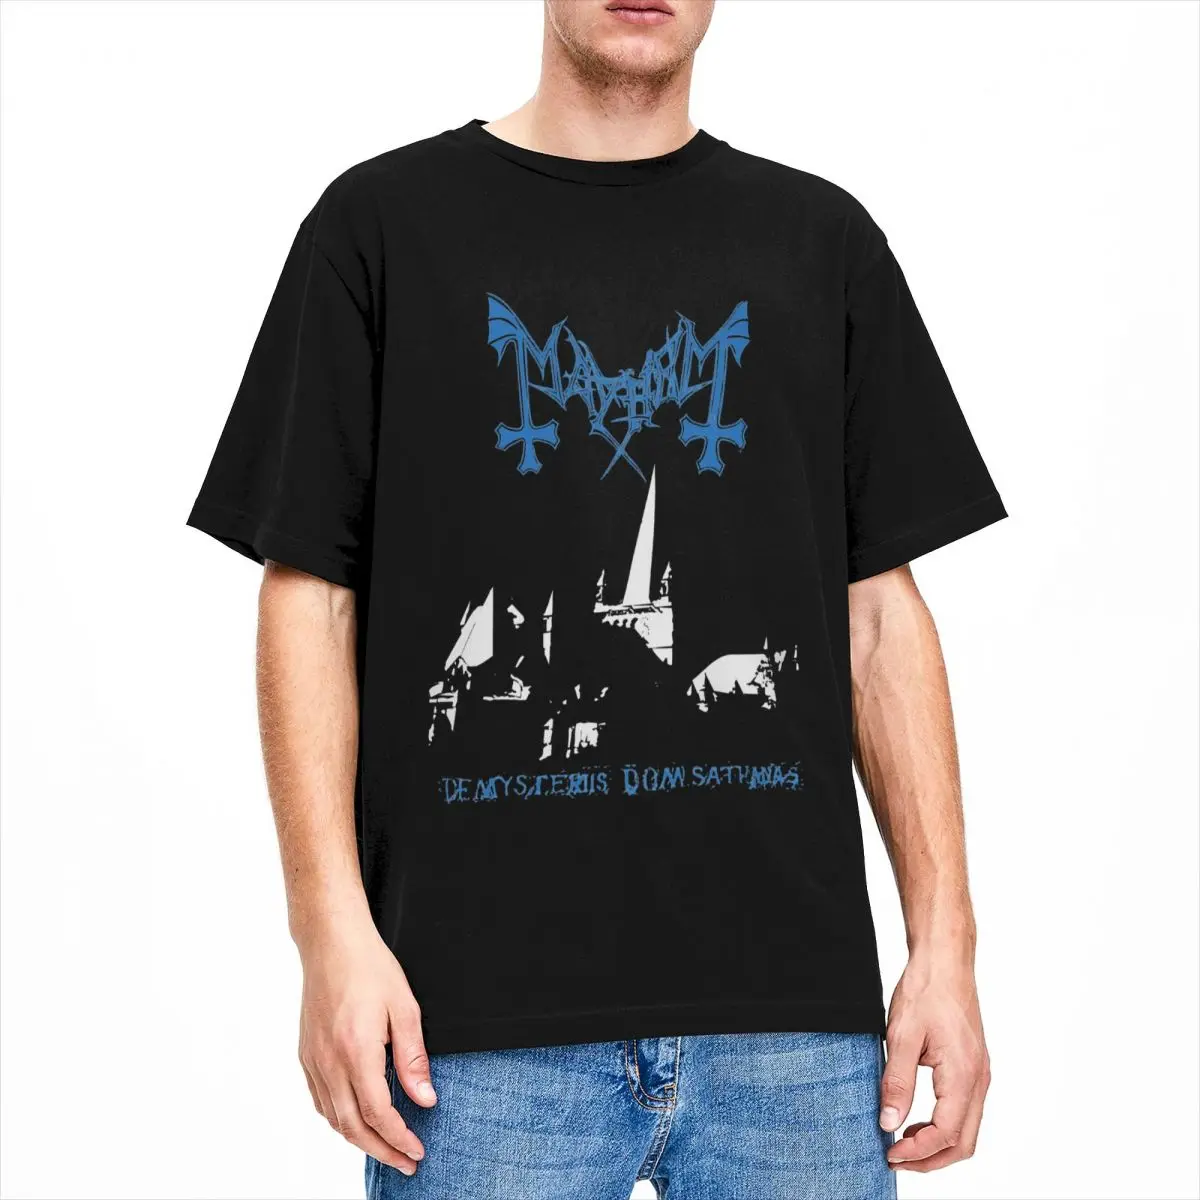 

Mayhem Black Metal Band Men T Shirt De Mysteriis Dom Sathanas Merch Fun Tee Shirt Round Neck T-Shirts Pure Cotton Printed Tops